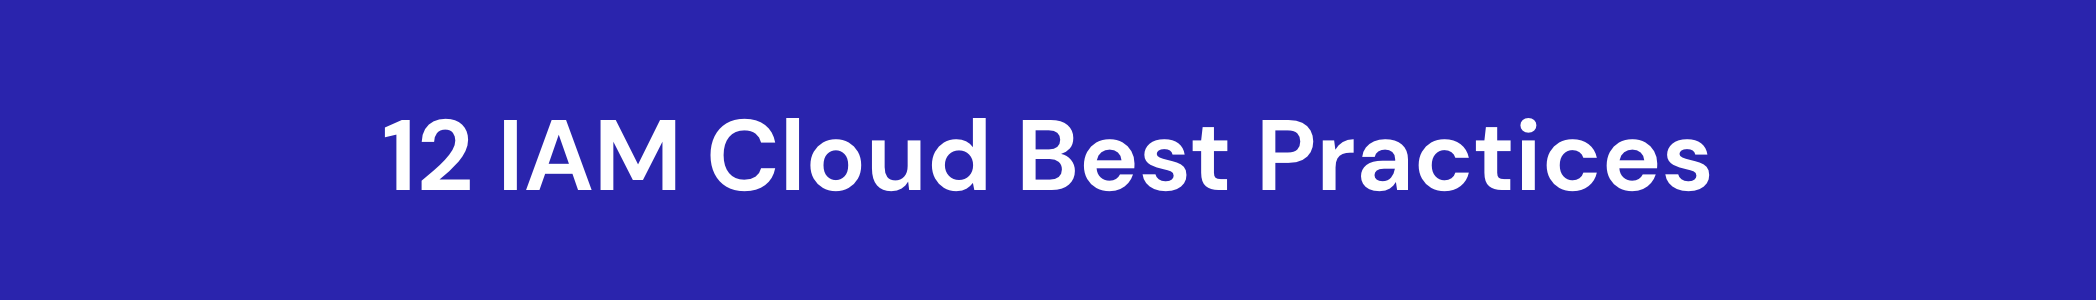 12 iam cloud best practices